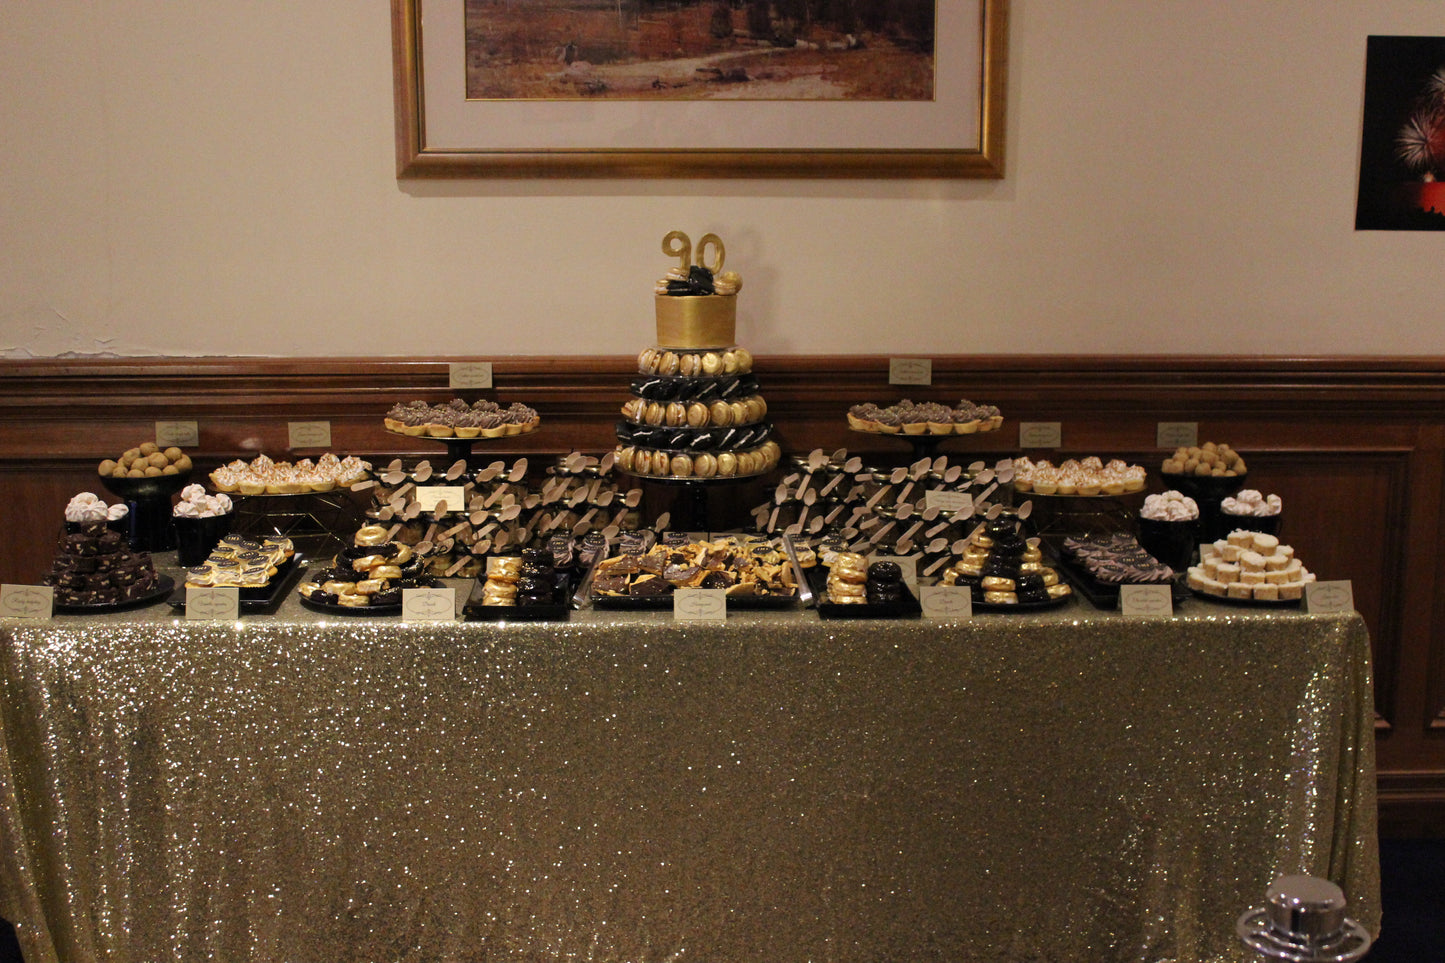 Grazing Dessert Black & Gold Theme 90th Birthday